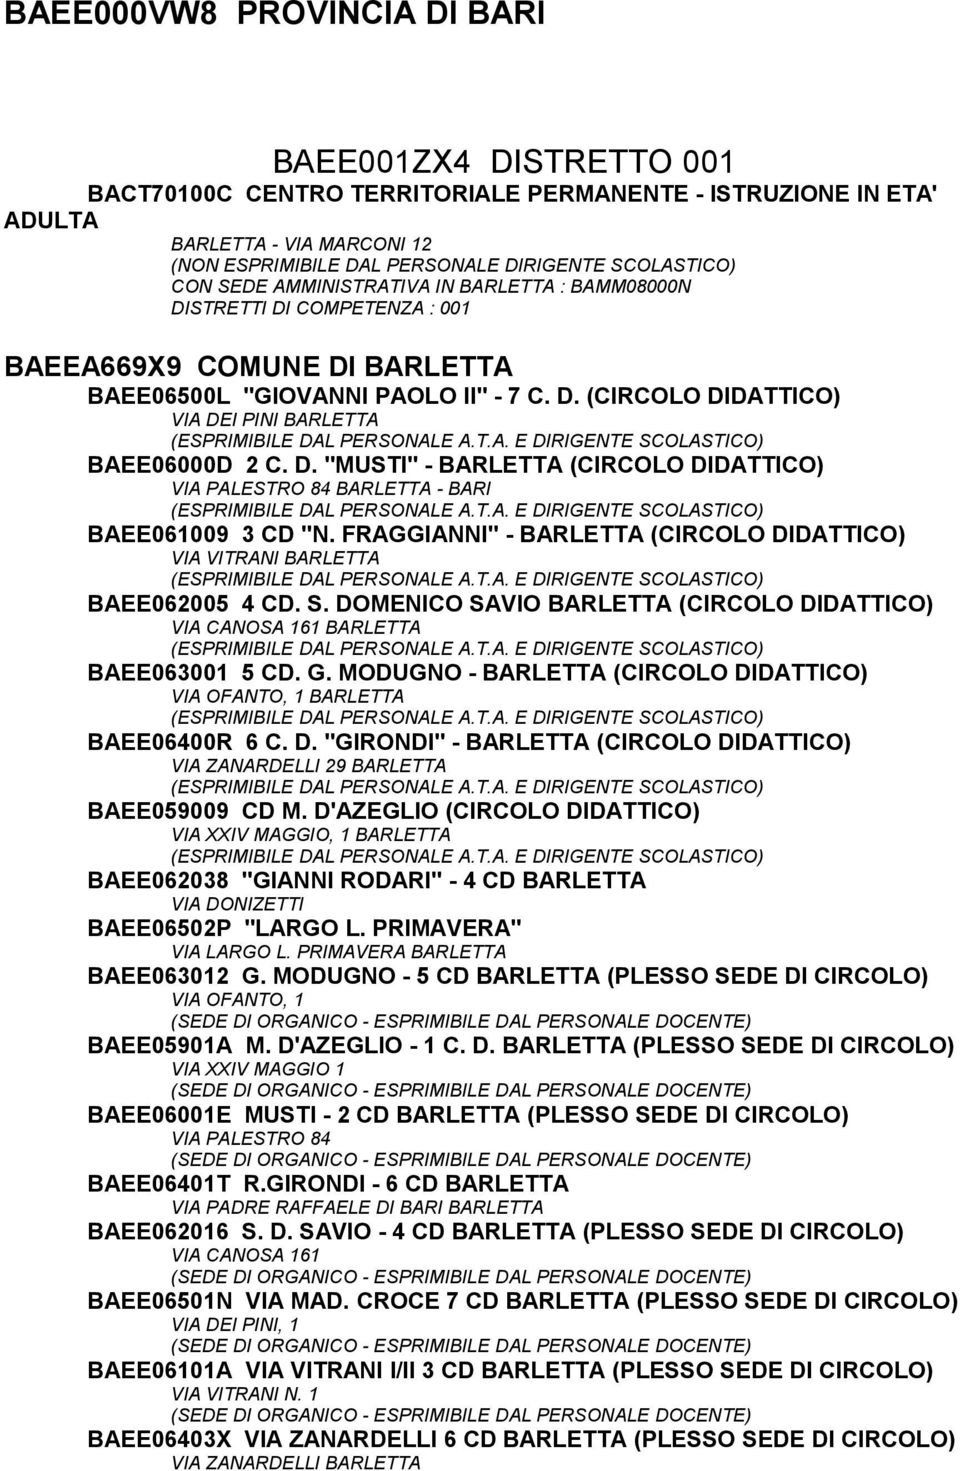 FRAGGIANNI" - BARLETTA (CIRCOLO DIDATTICO) VIA VITRANI BARLETTA BAEE062005 4 CD. S. DOMENICO SAVIO BARLETTA (CIRCOLO DIDATTICO) VIA CANOSA 161 BARLETTA BAEE063001 5 CD. G.